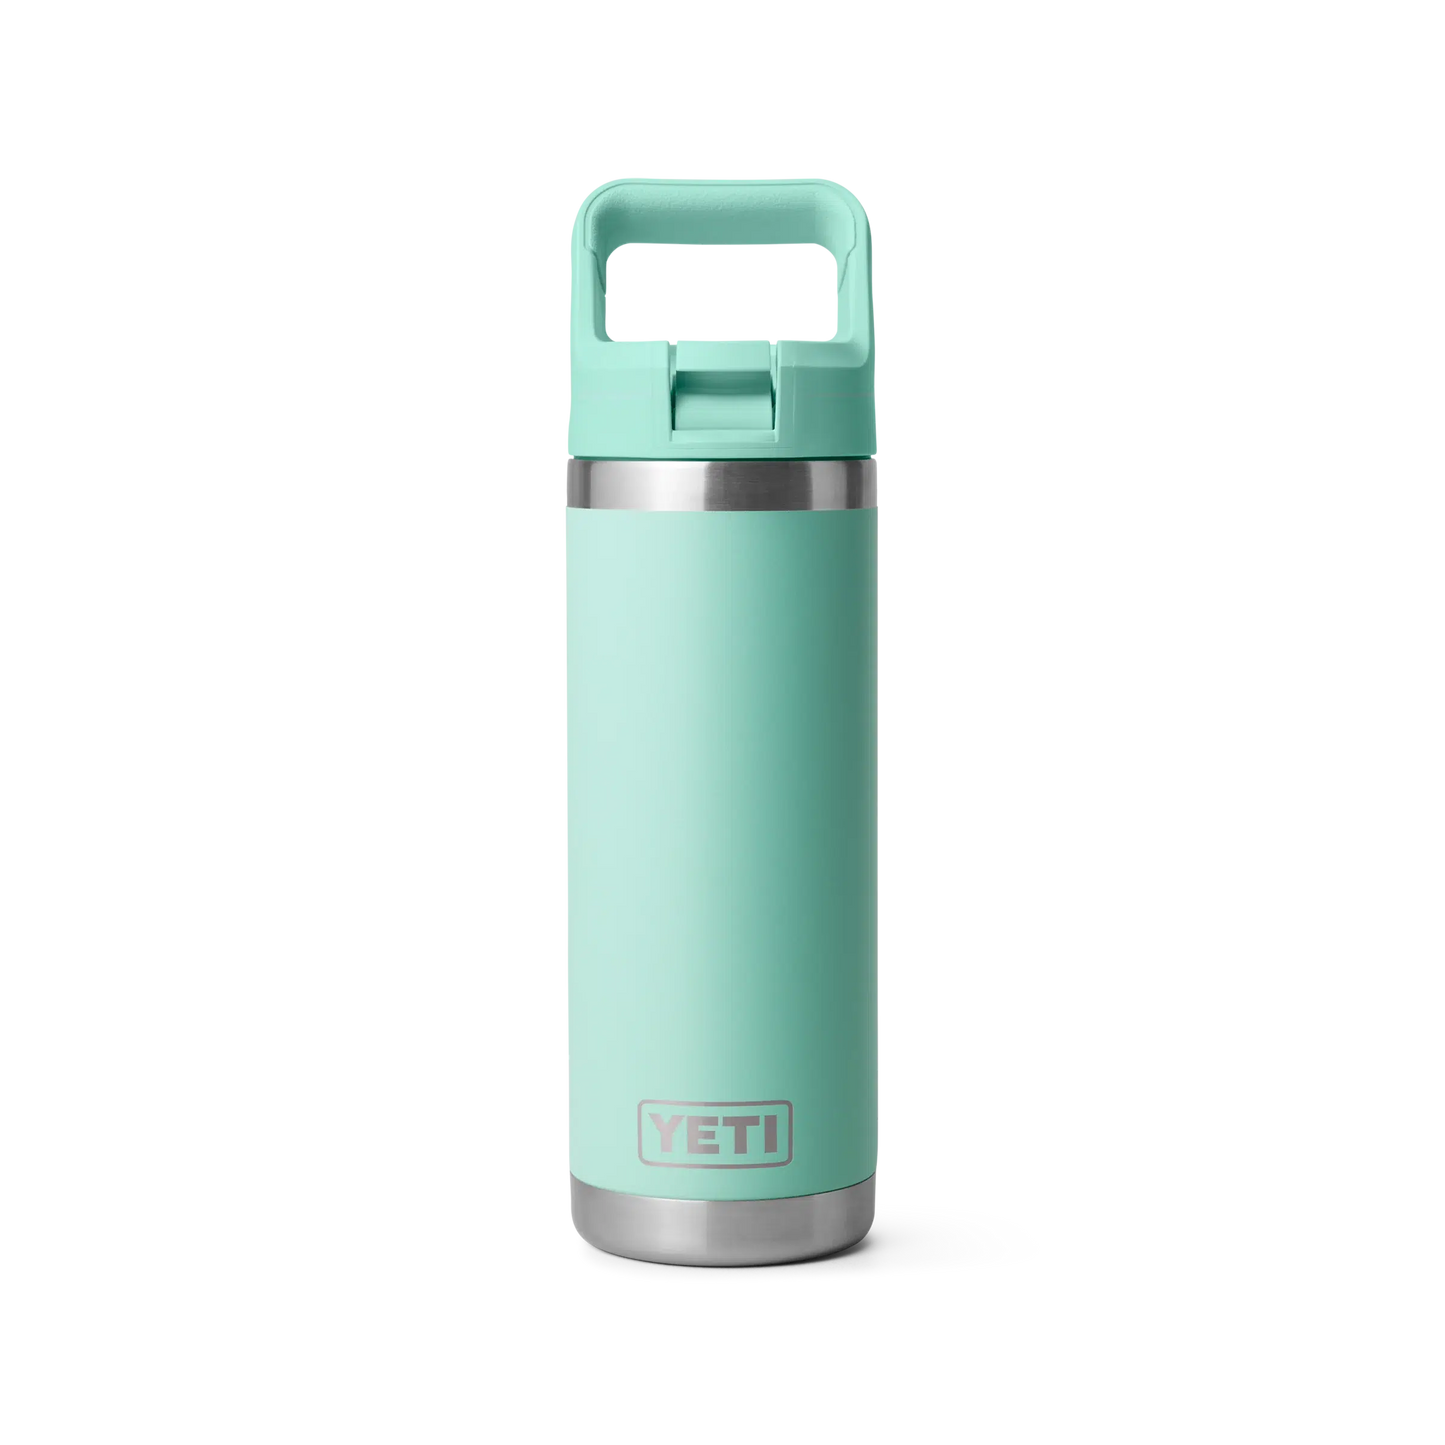 Yeti Rambler 18oz (532ml) Reusable Bottle with Straw Cap-Coolers & Drinkware-Yeti-Seafoam-Fishing Station